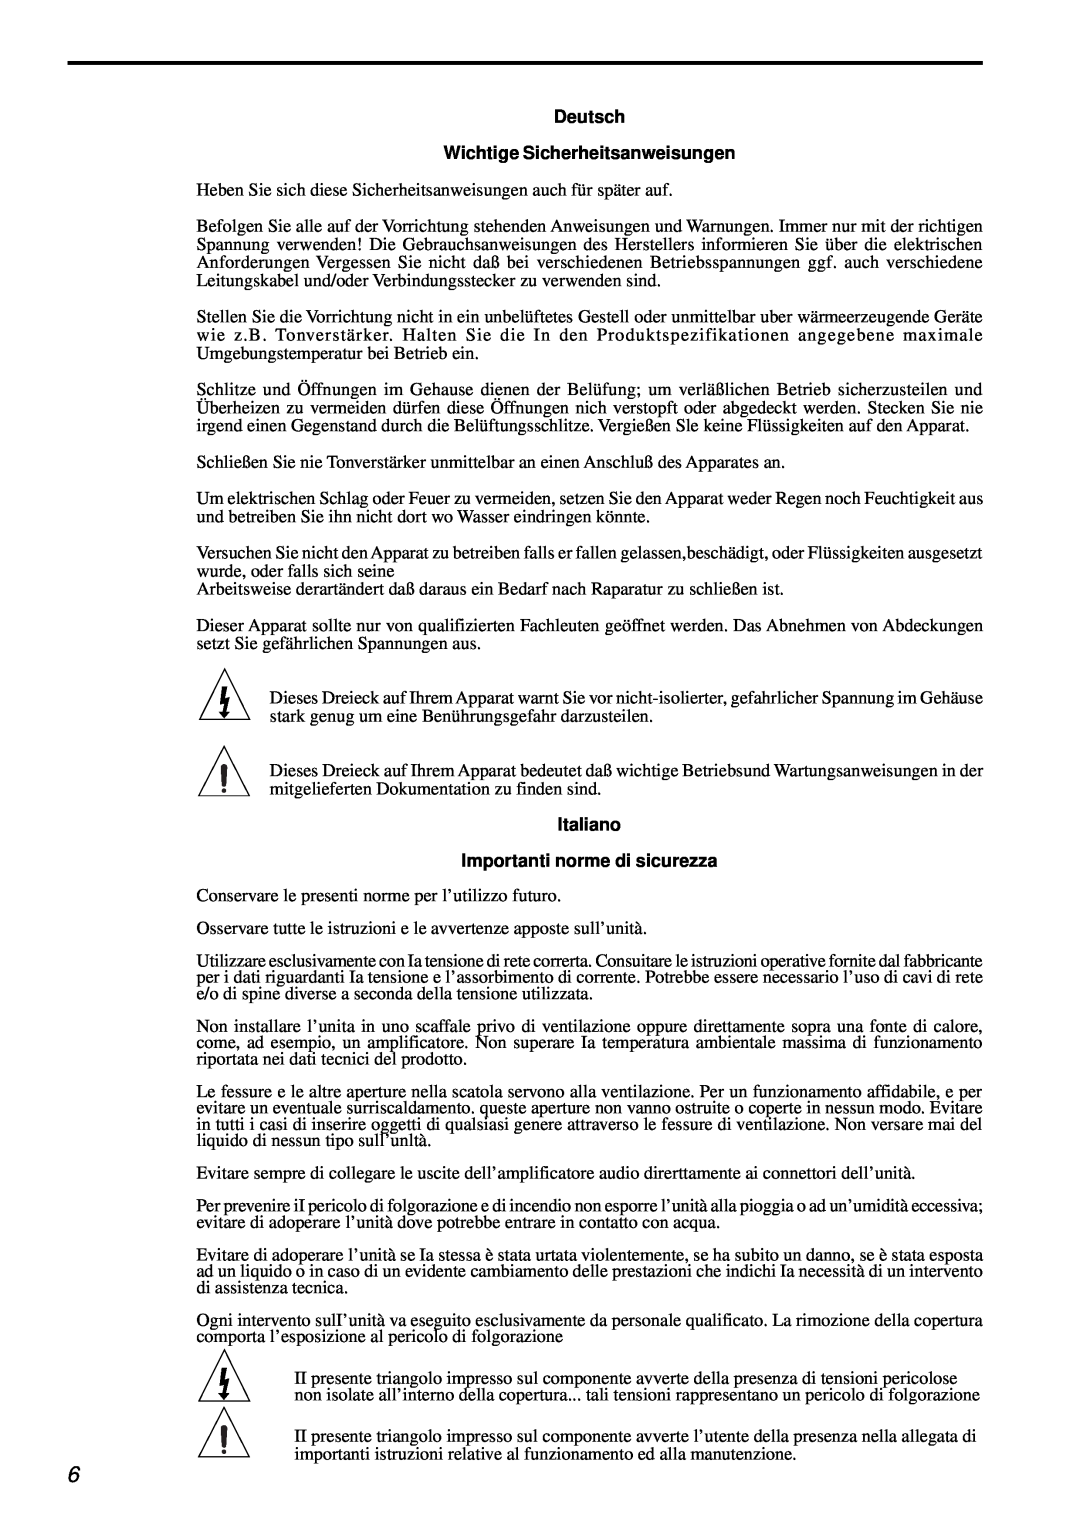 Parasound AVC-2500 owner manual Deutsch Wichtige Sicherheitsanweisungen, Italiano Importanti norme di sicurezza 